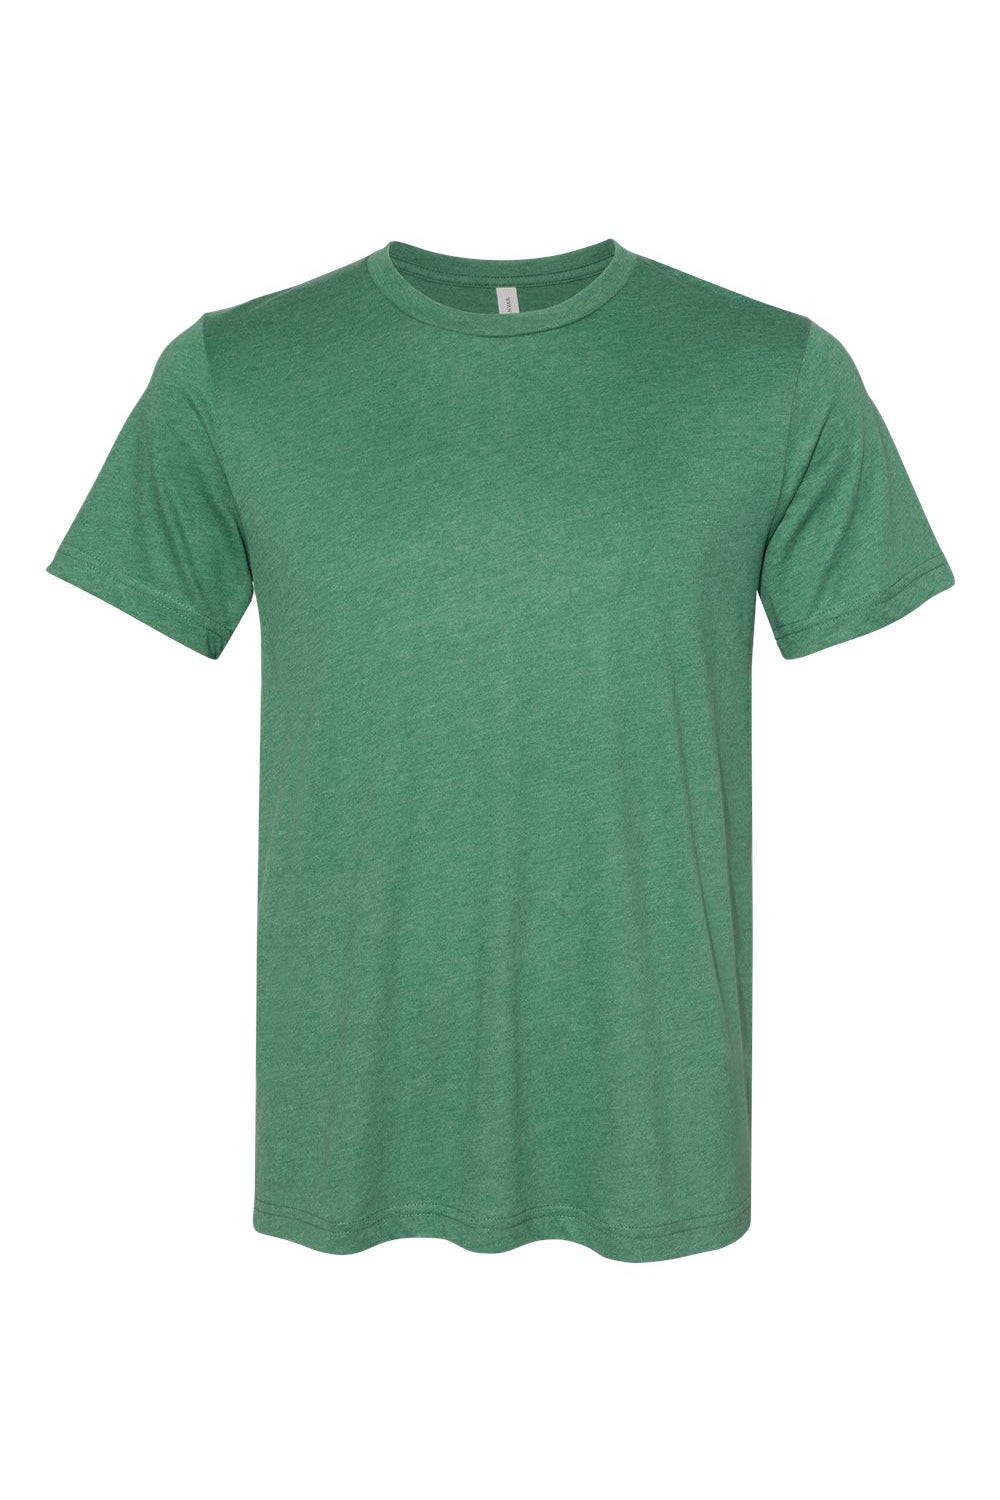 Bella + Canvas BC3301/3301C/3301 Mens Jersey Short Sleeve Crewneck T-Shirt Heather Grass Green Flat Front